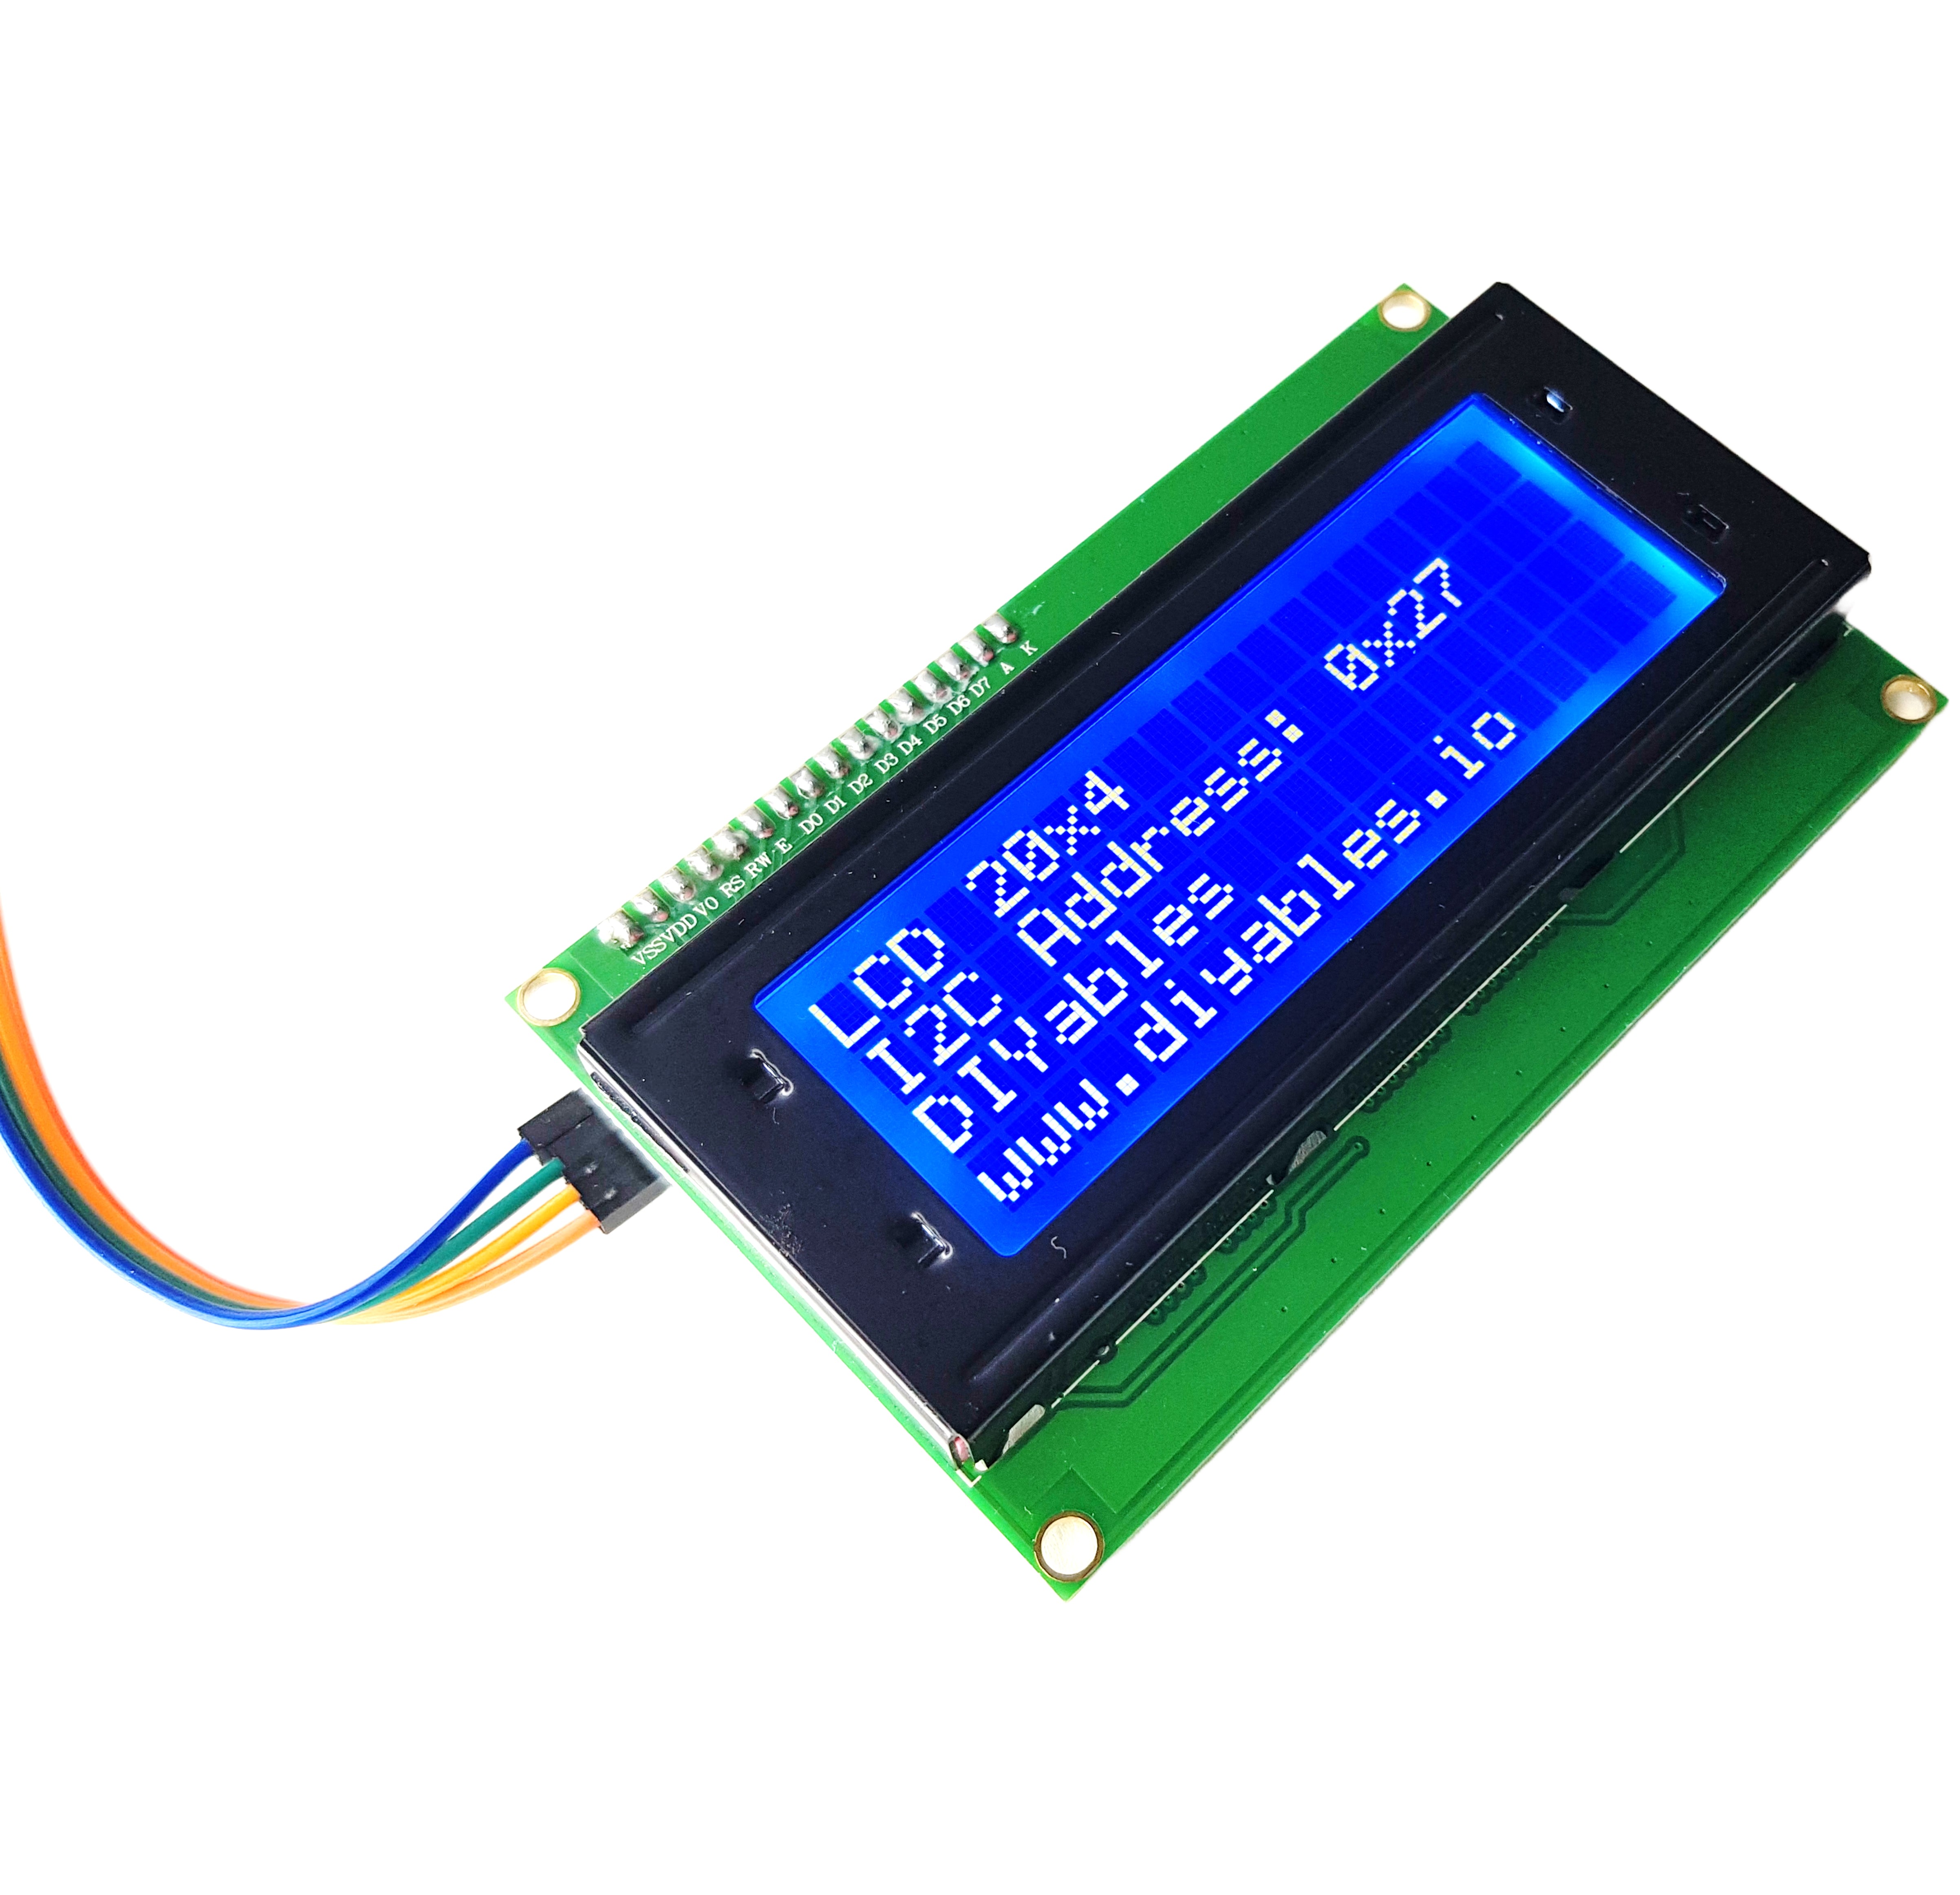 LCD 20x4 Display I2C Interface for Arduino, ESP32, ESP8266, Raspberry Pi